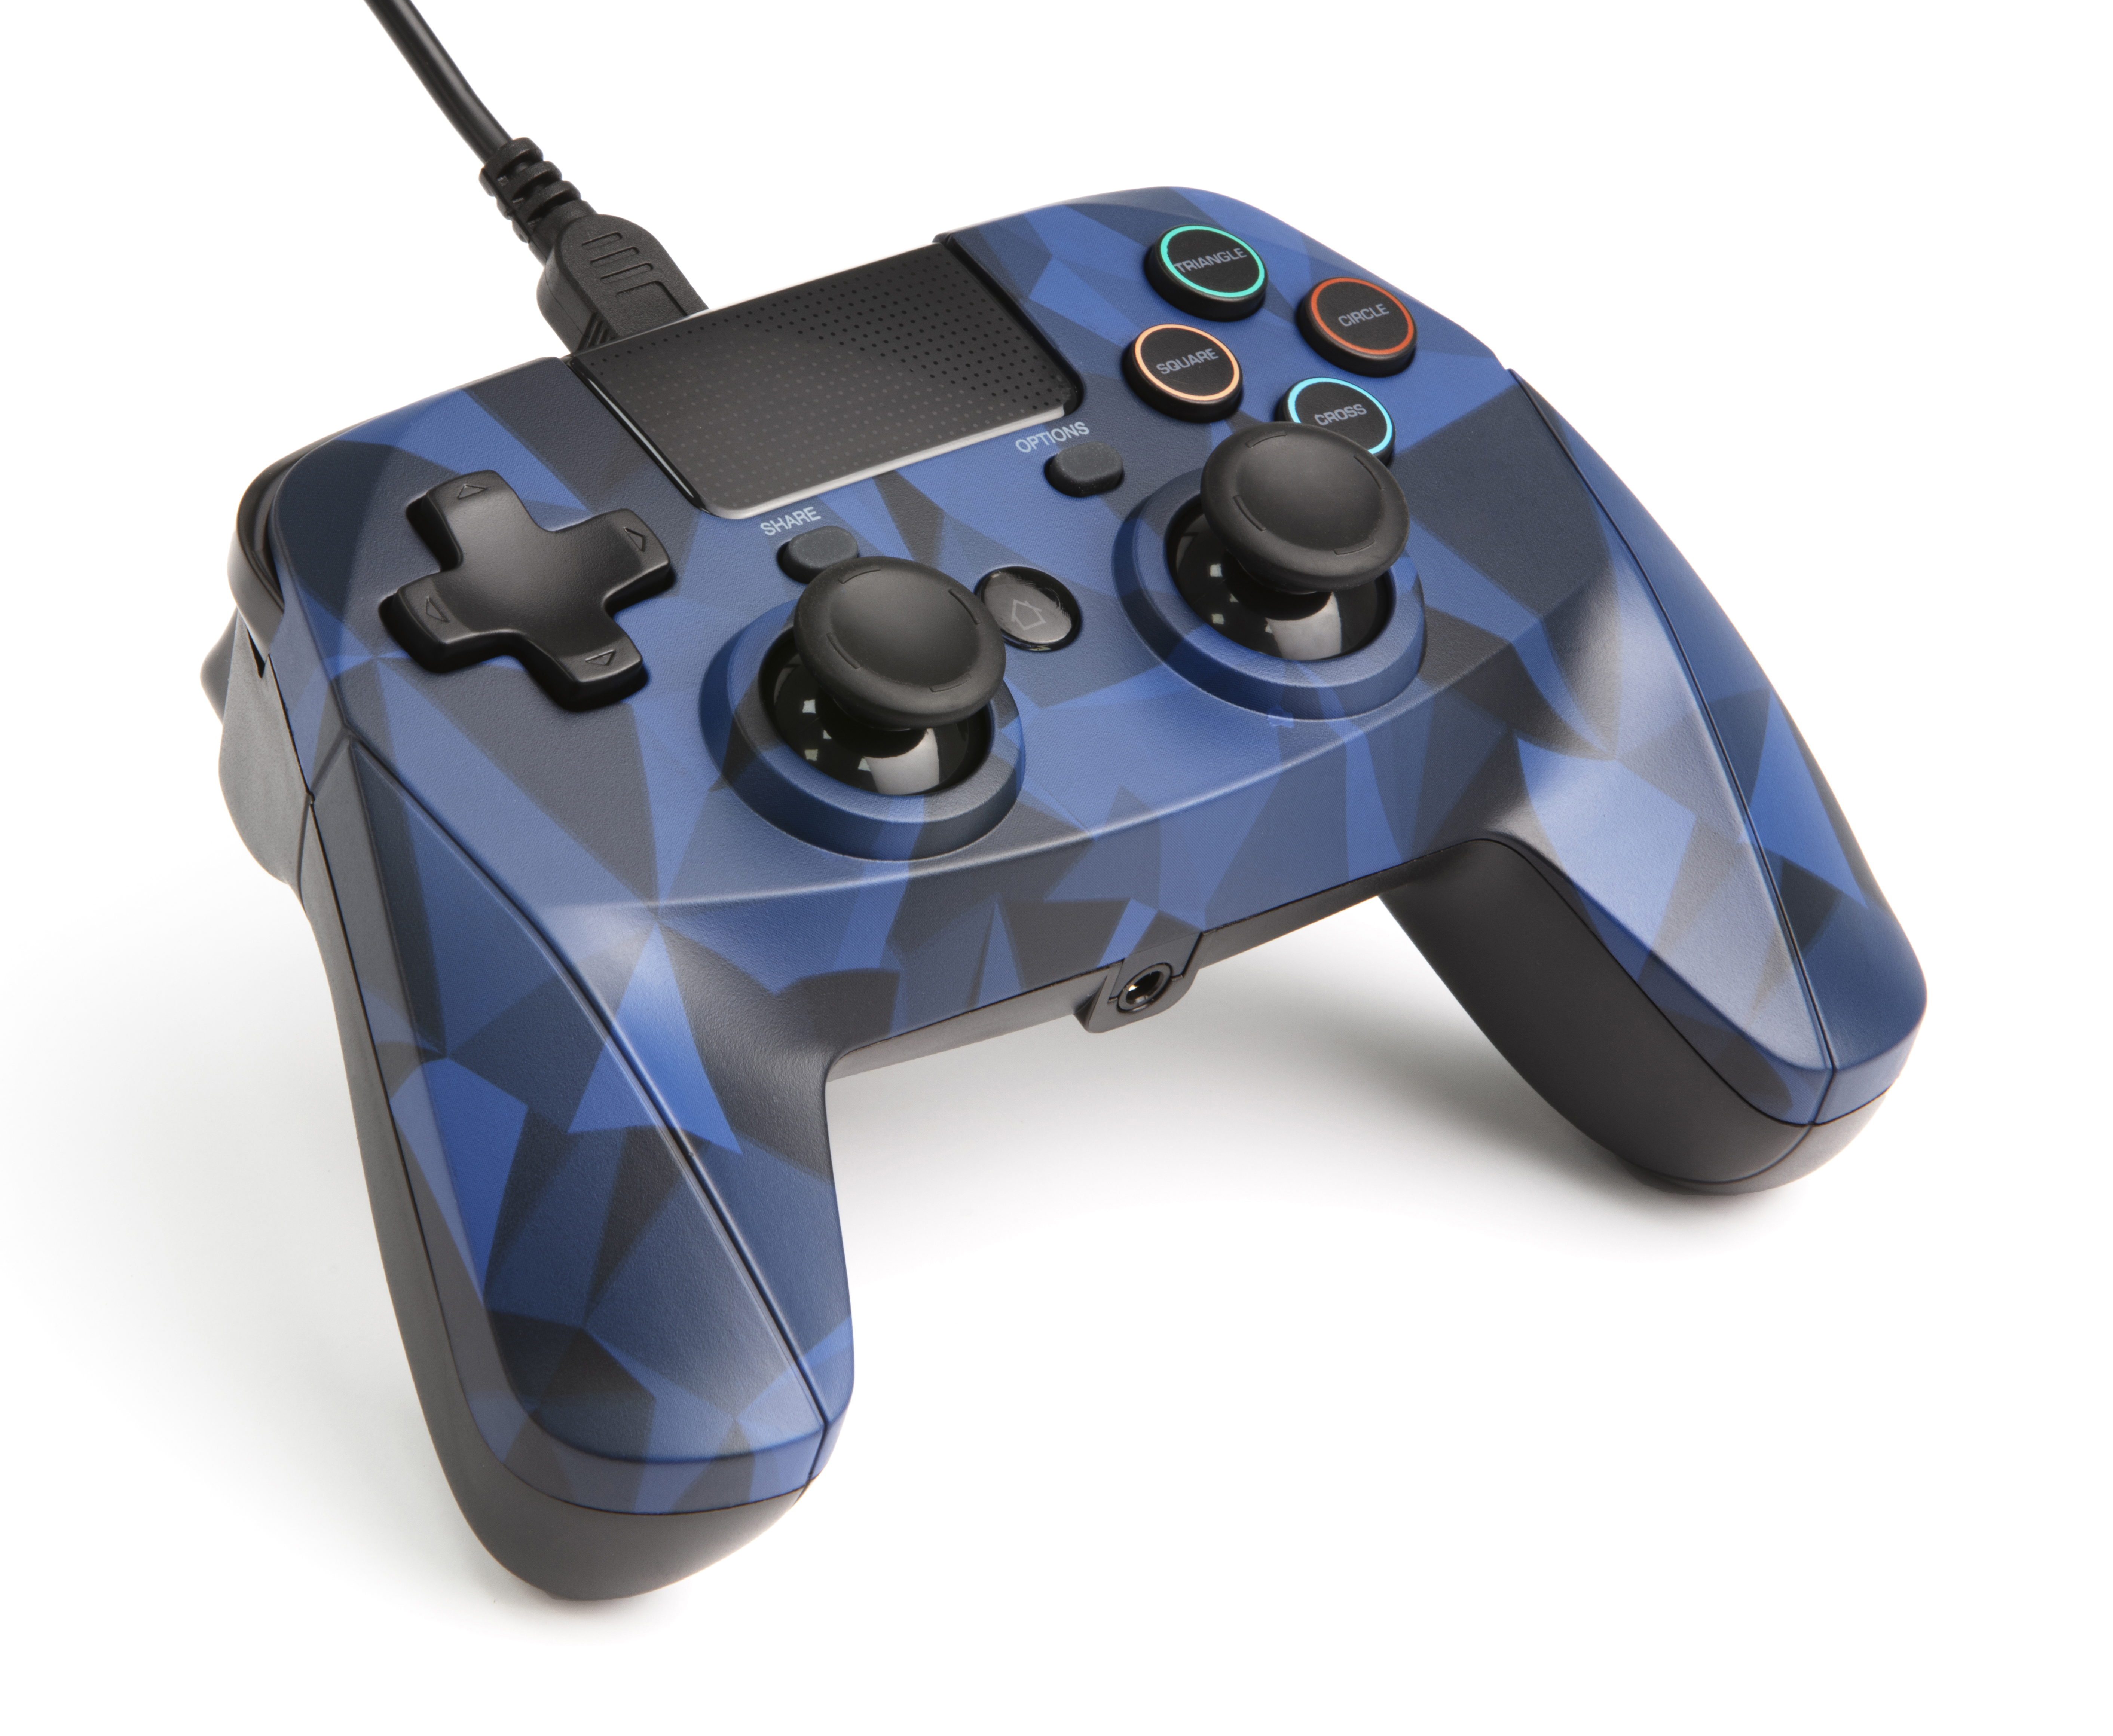 SNAKEBYTE 4 S Controller 4, Blau 3 PlayStation Camo für PlayStation